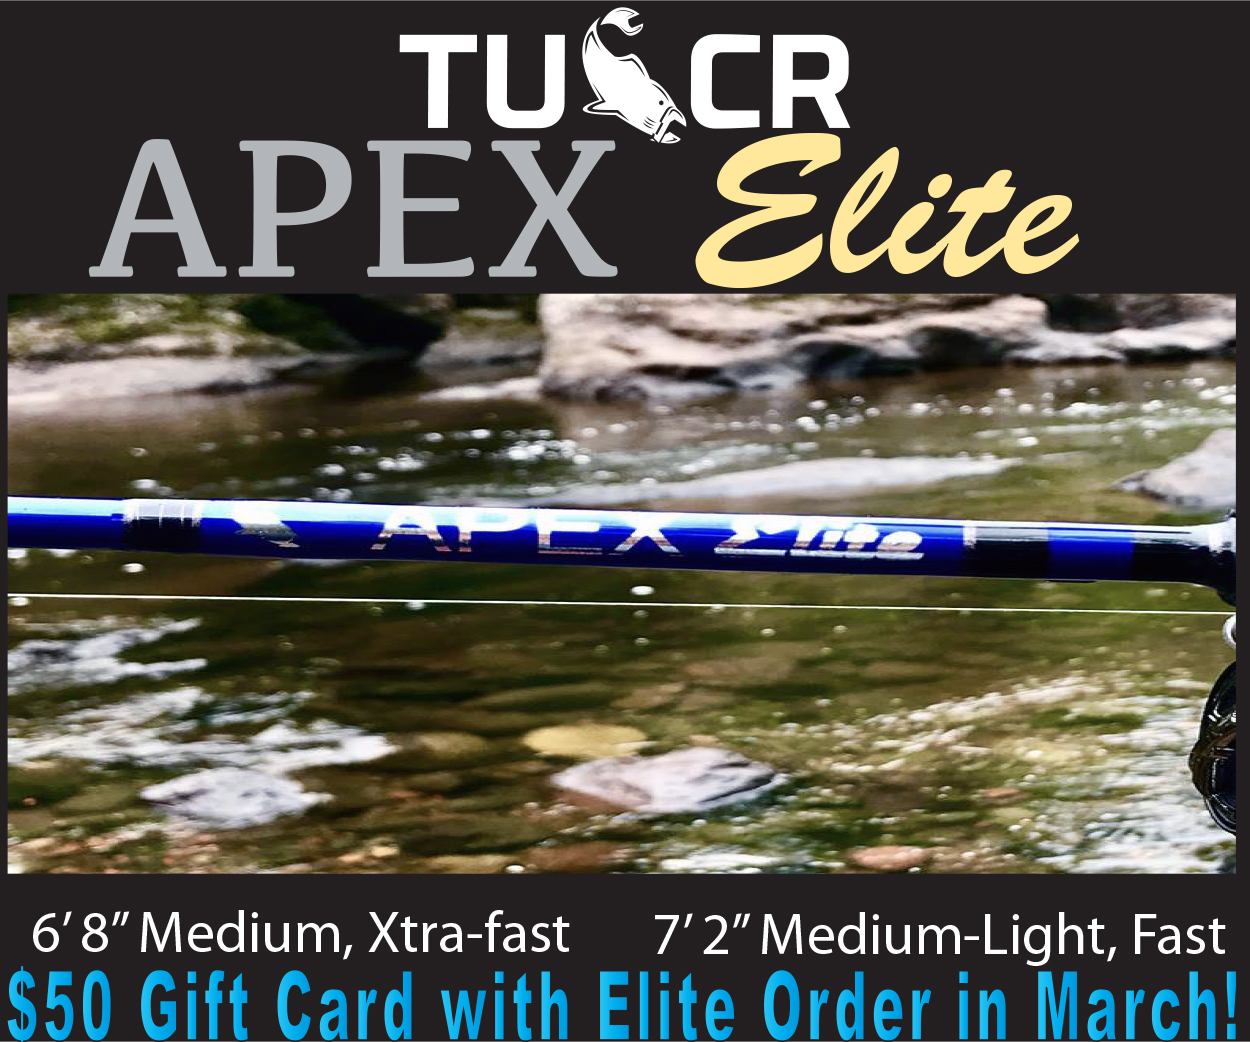 TUCR APEX Elite Special!!! - Sponsor's Showcase - Sponsor's Showcase